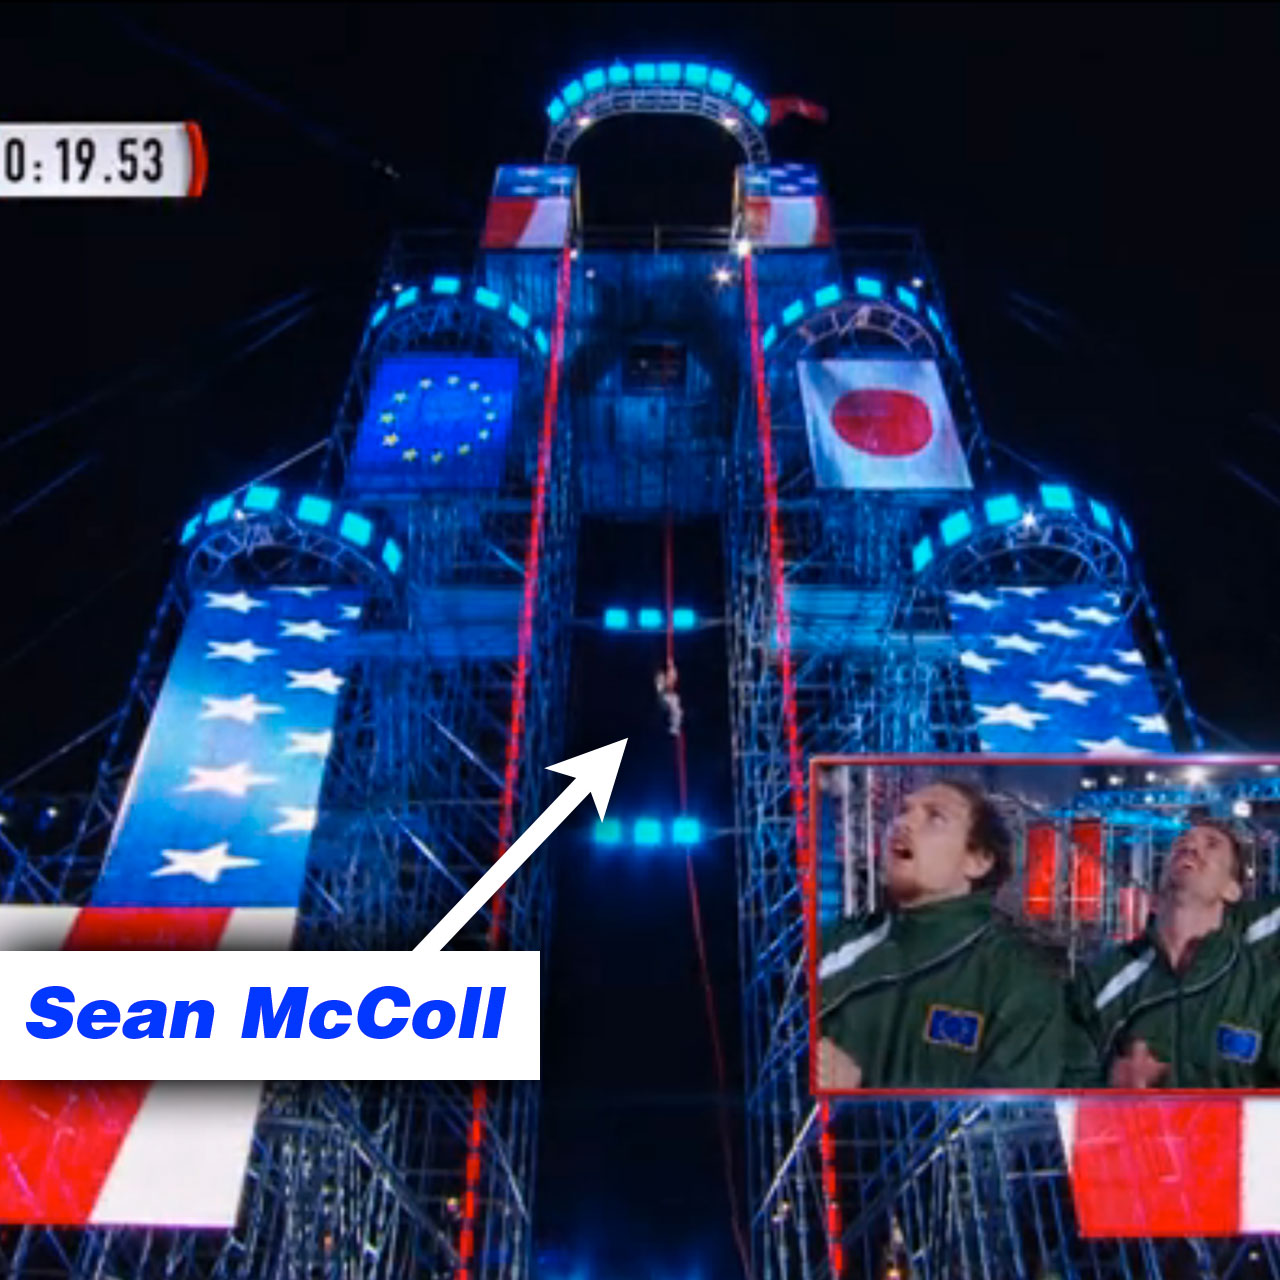 Team Europe wins Ninja Warrior after Sean McColl's epic rope climb